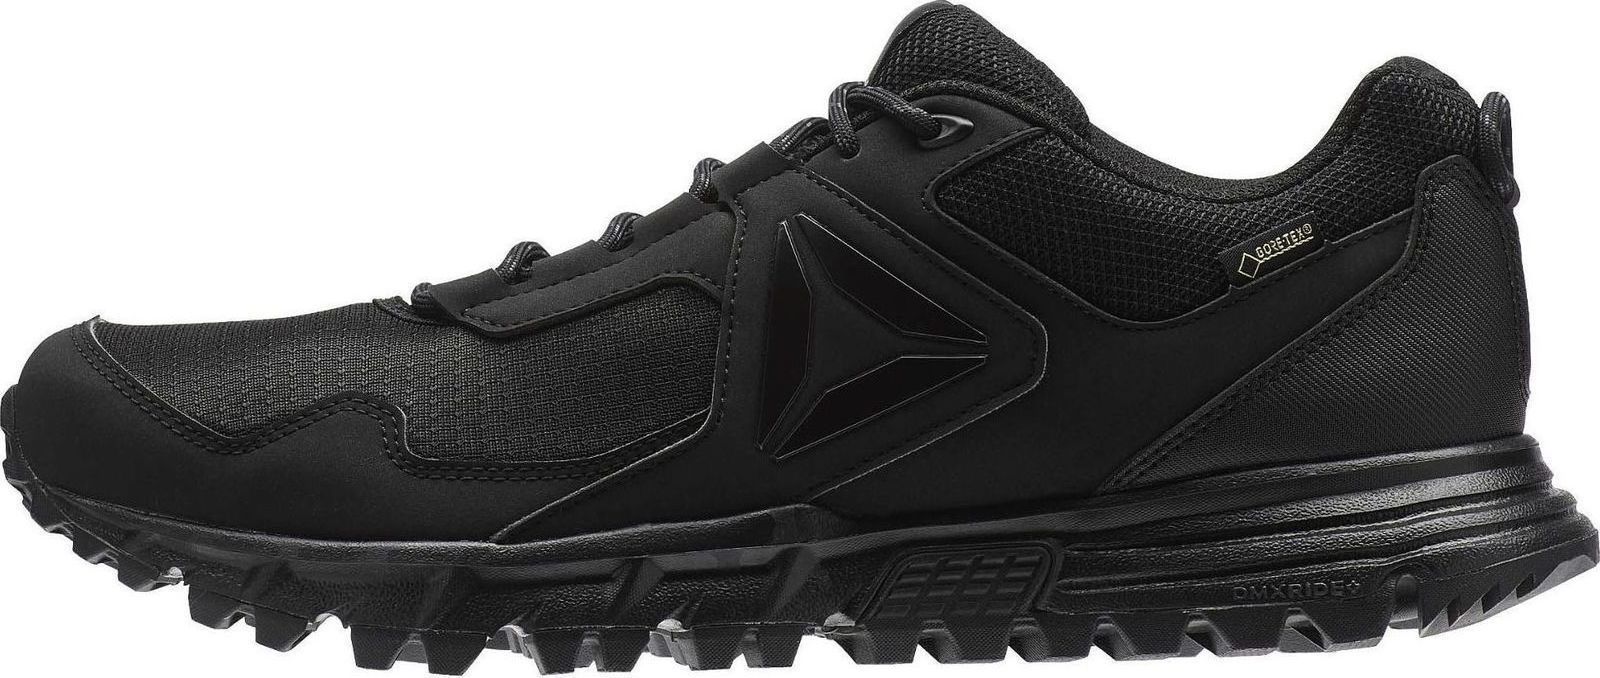 Reebok Sawcut GTX BD5861 Ανδρικά Αθλητικά Παπούτσια Trail Running Μαύρα Αδιάβροχα με Μεμβράνη Gore-Tex | Skroutz.gr